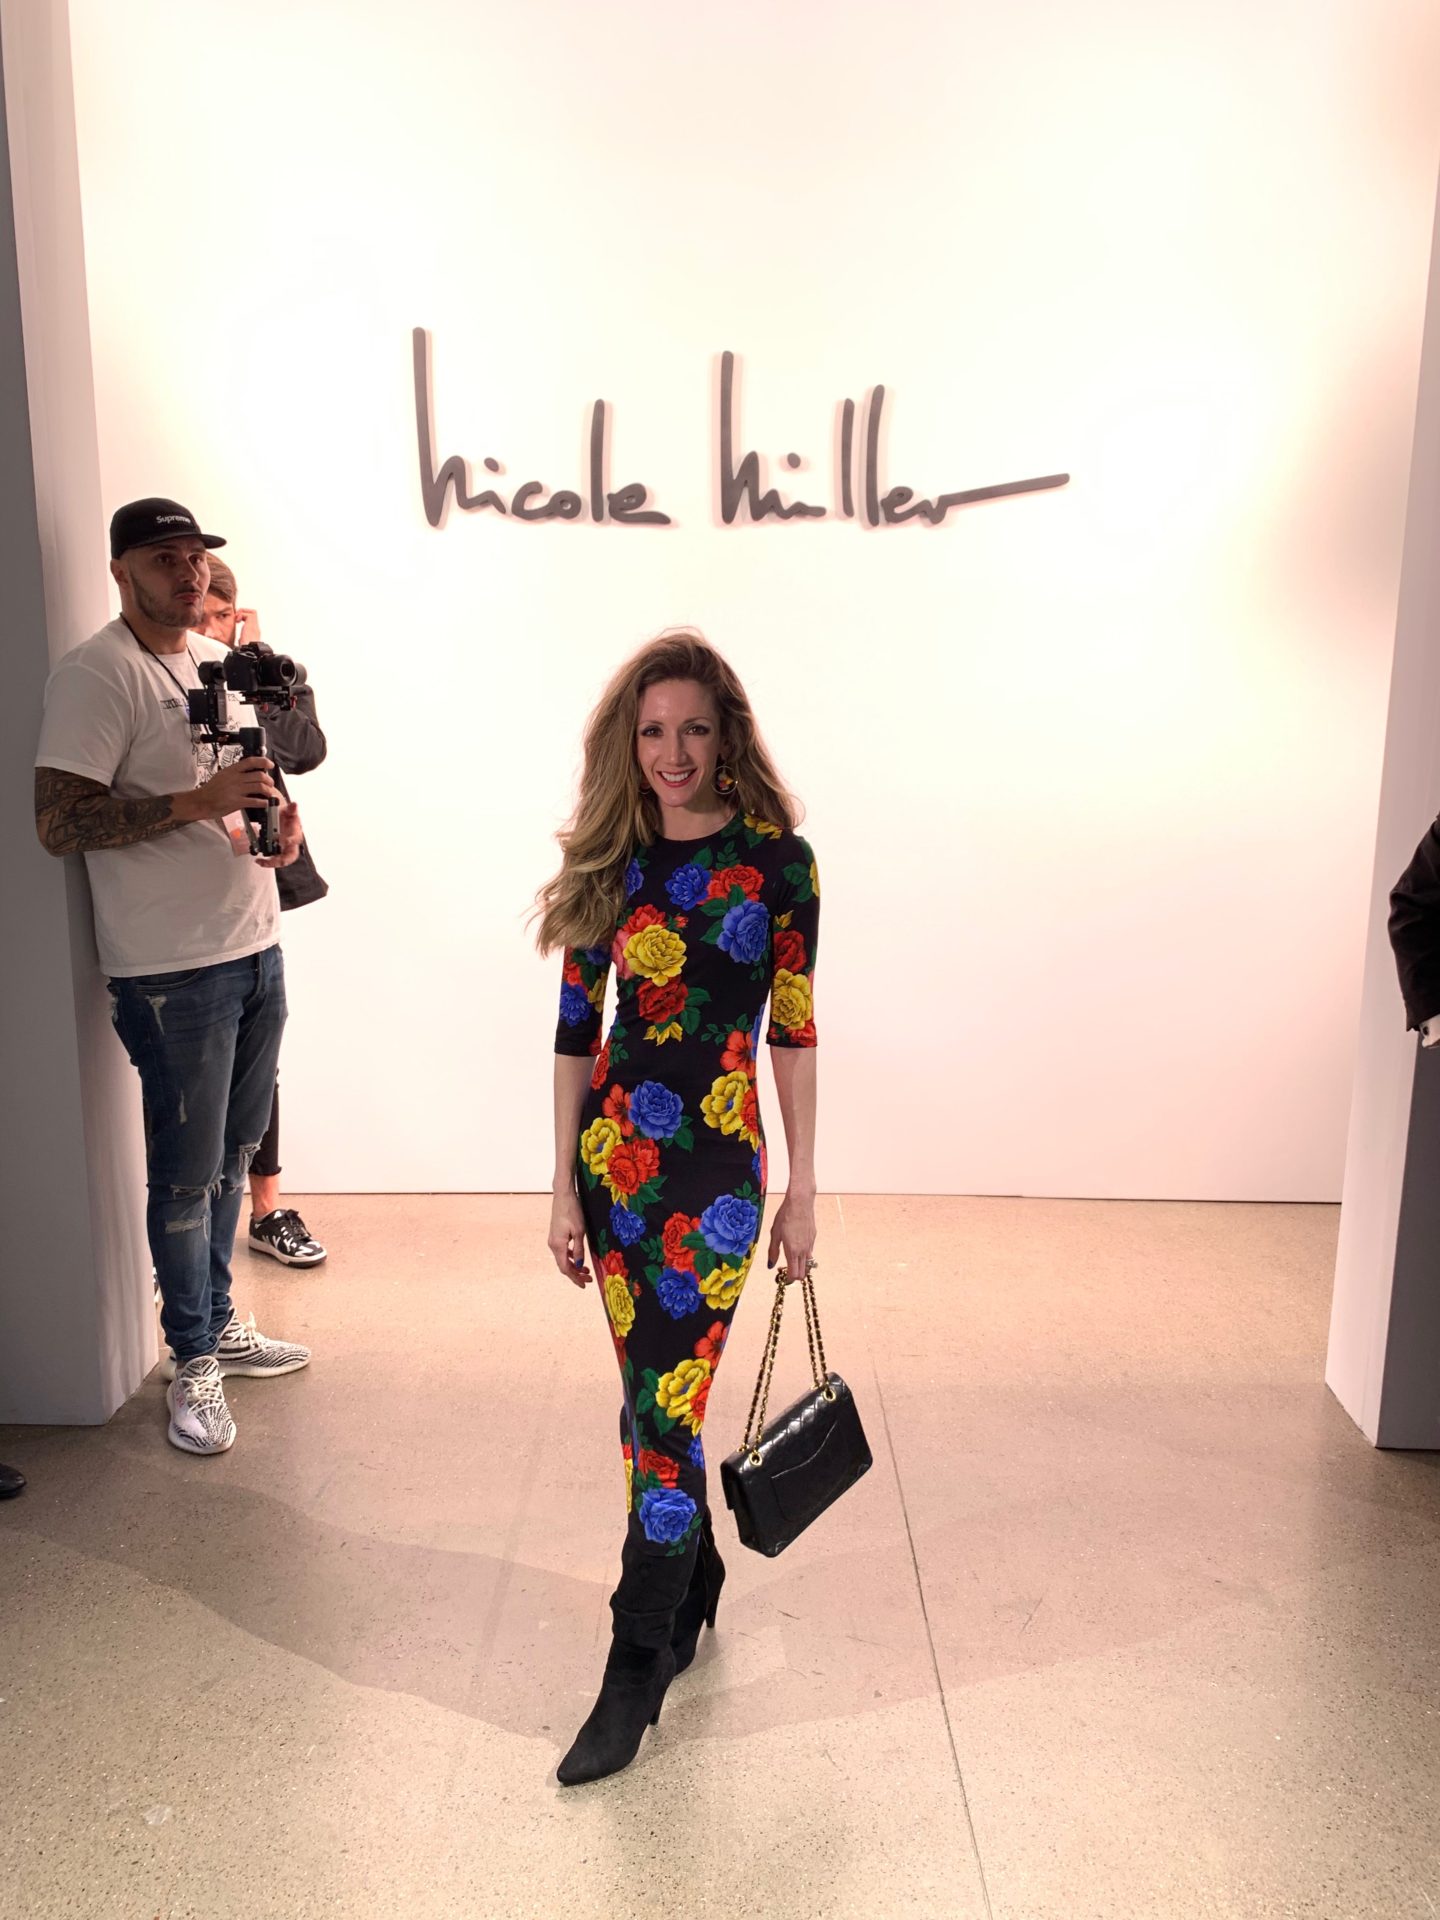 Nicole Miller at NYFW 2019